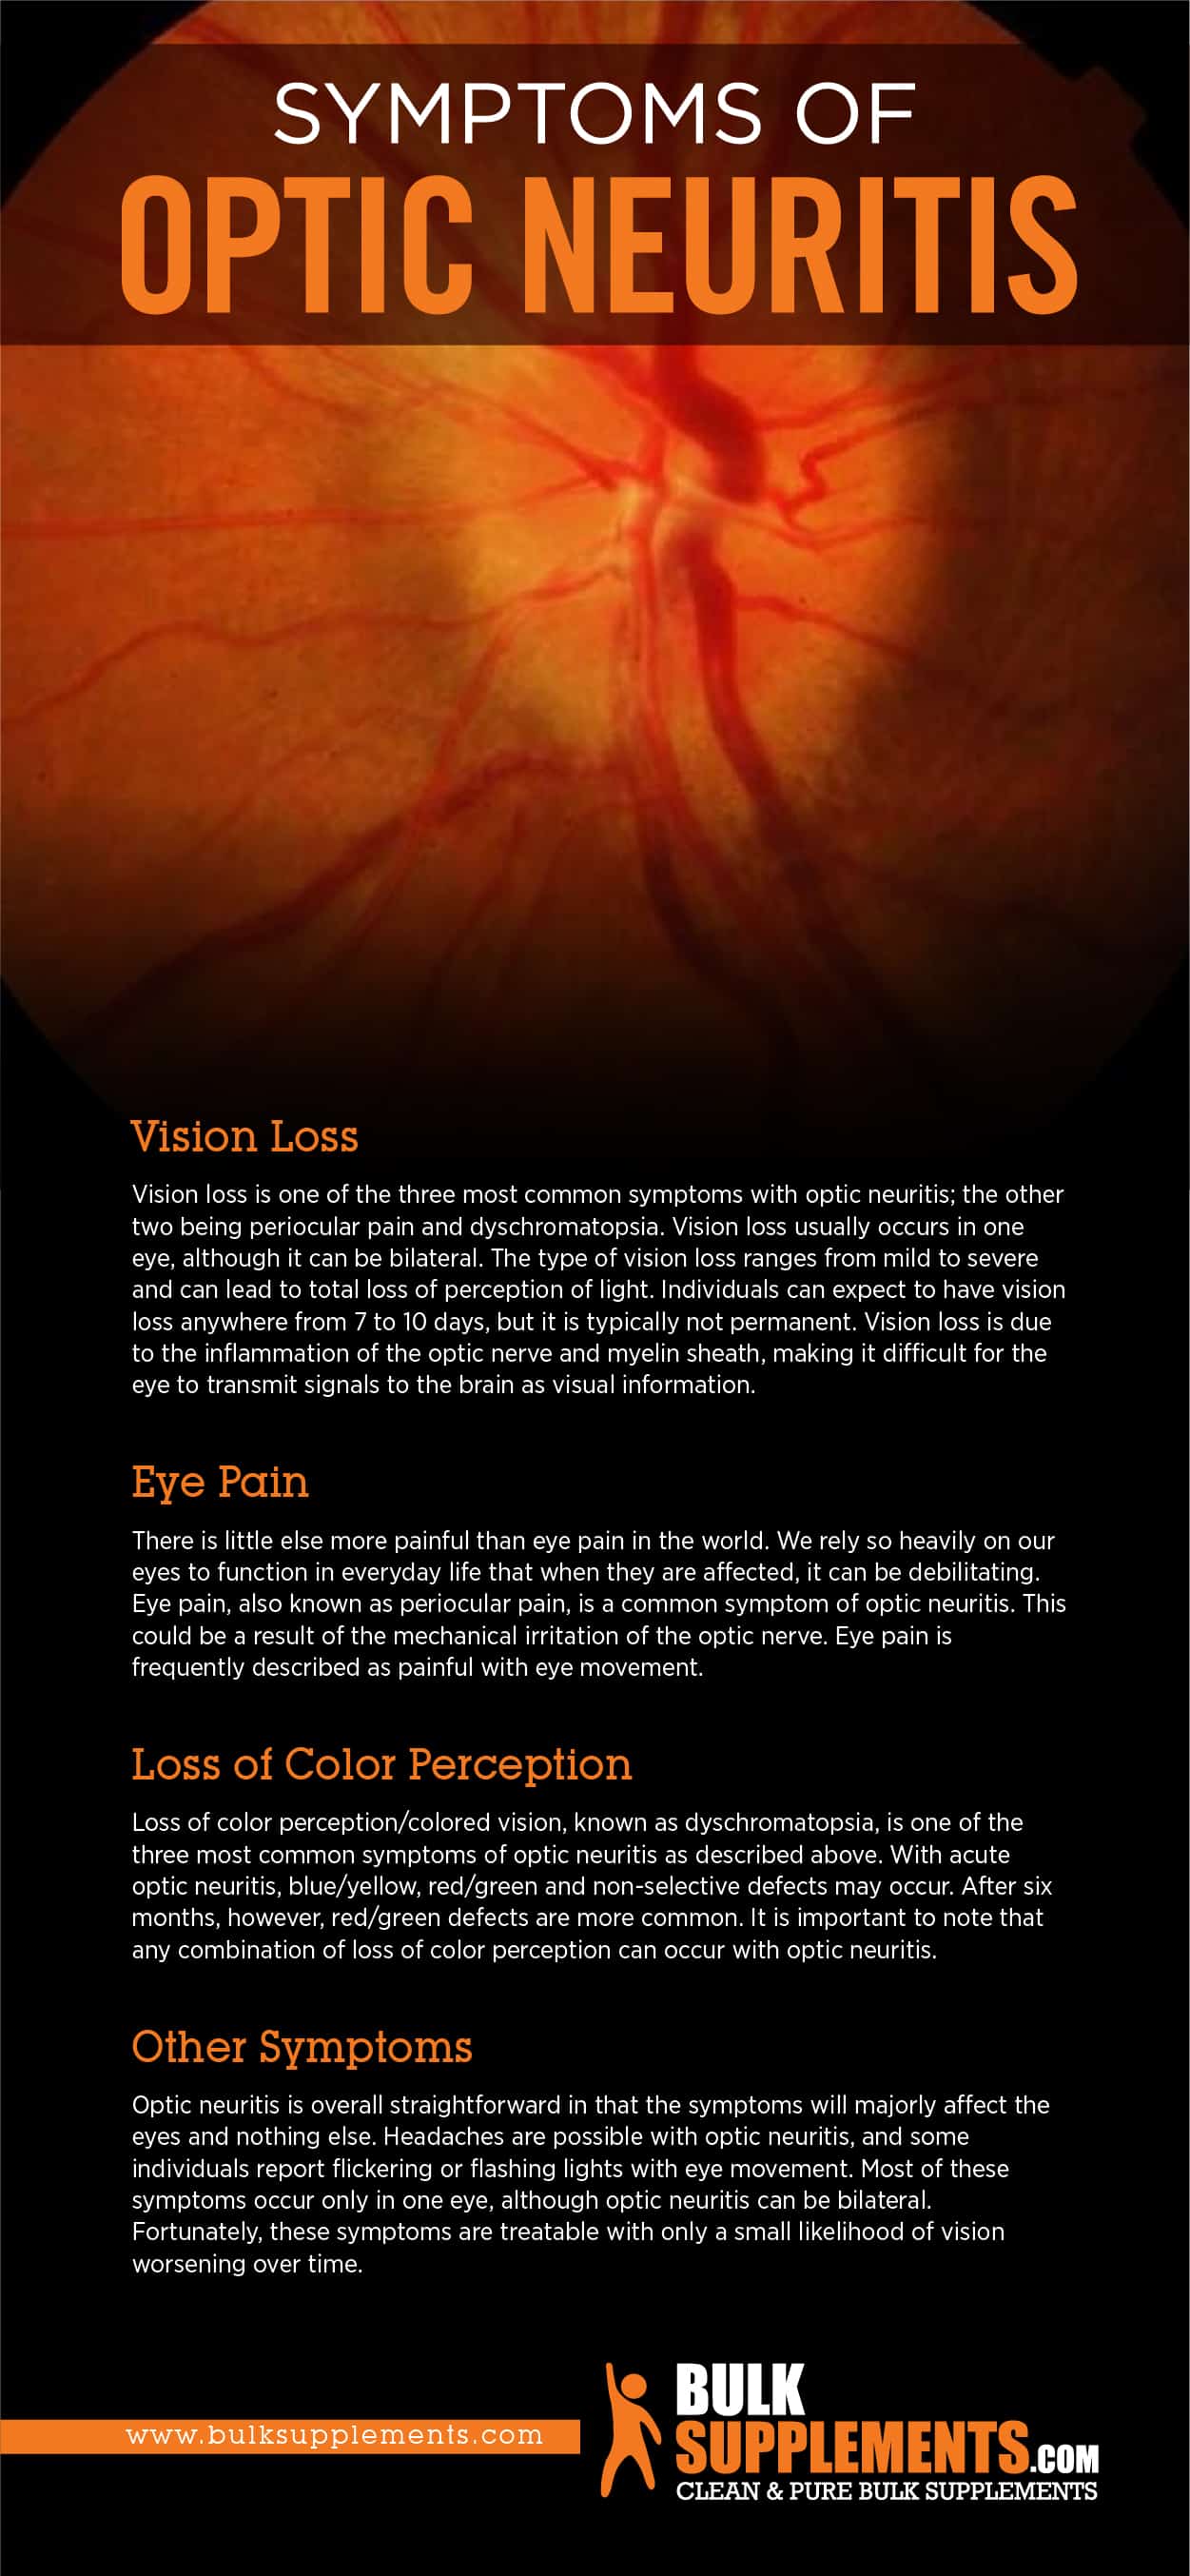 Symptoms of Optic Neuritis